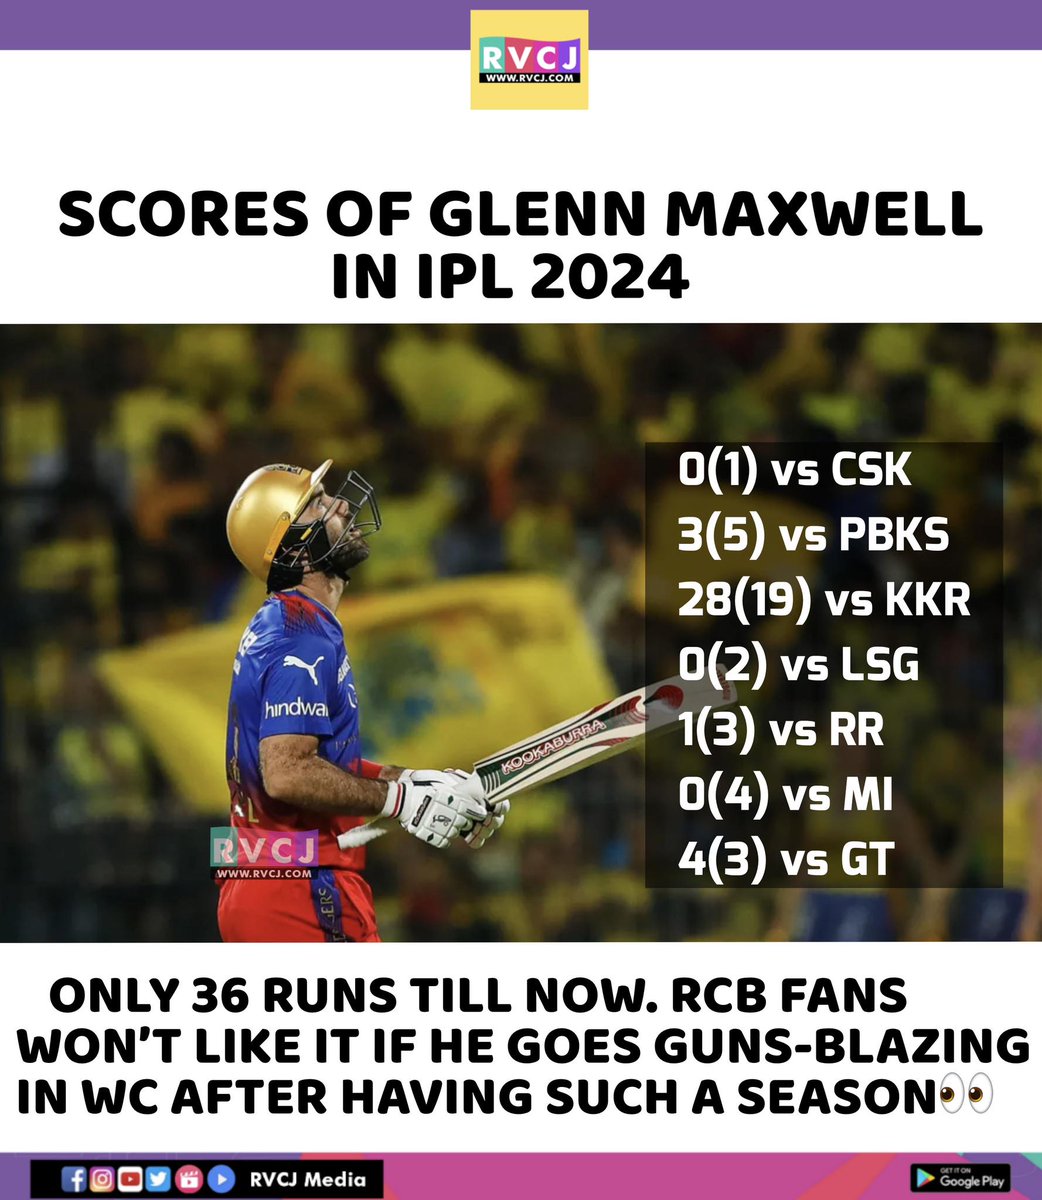 Score of Glenn Maxwell
#glennmaxwell 
#ViratKohli #rcb #royalchallengersbangalore #gujrattitans